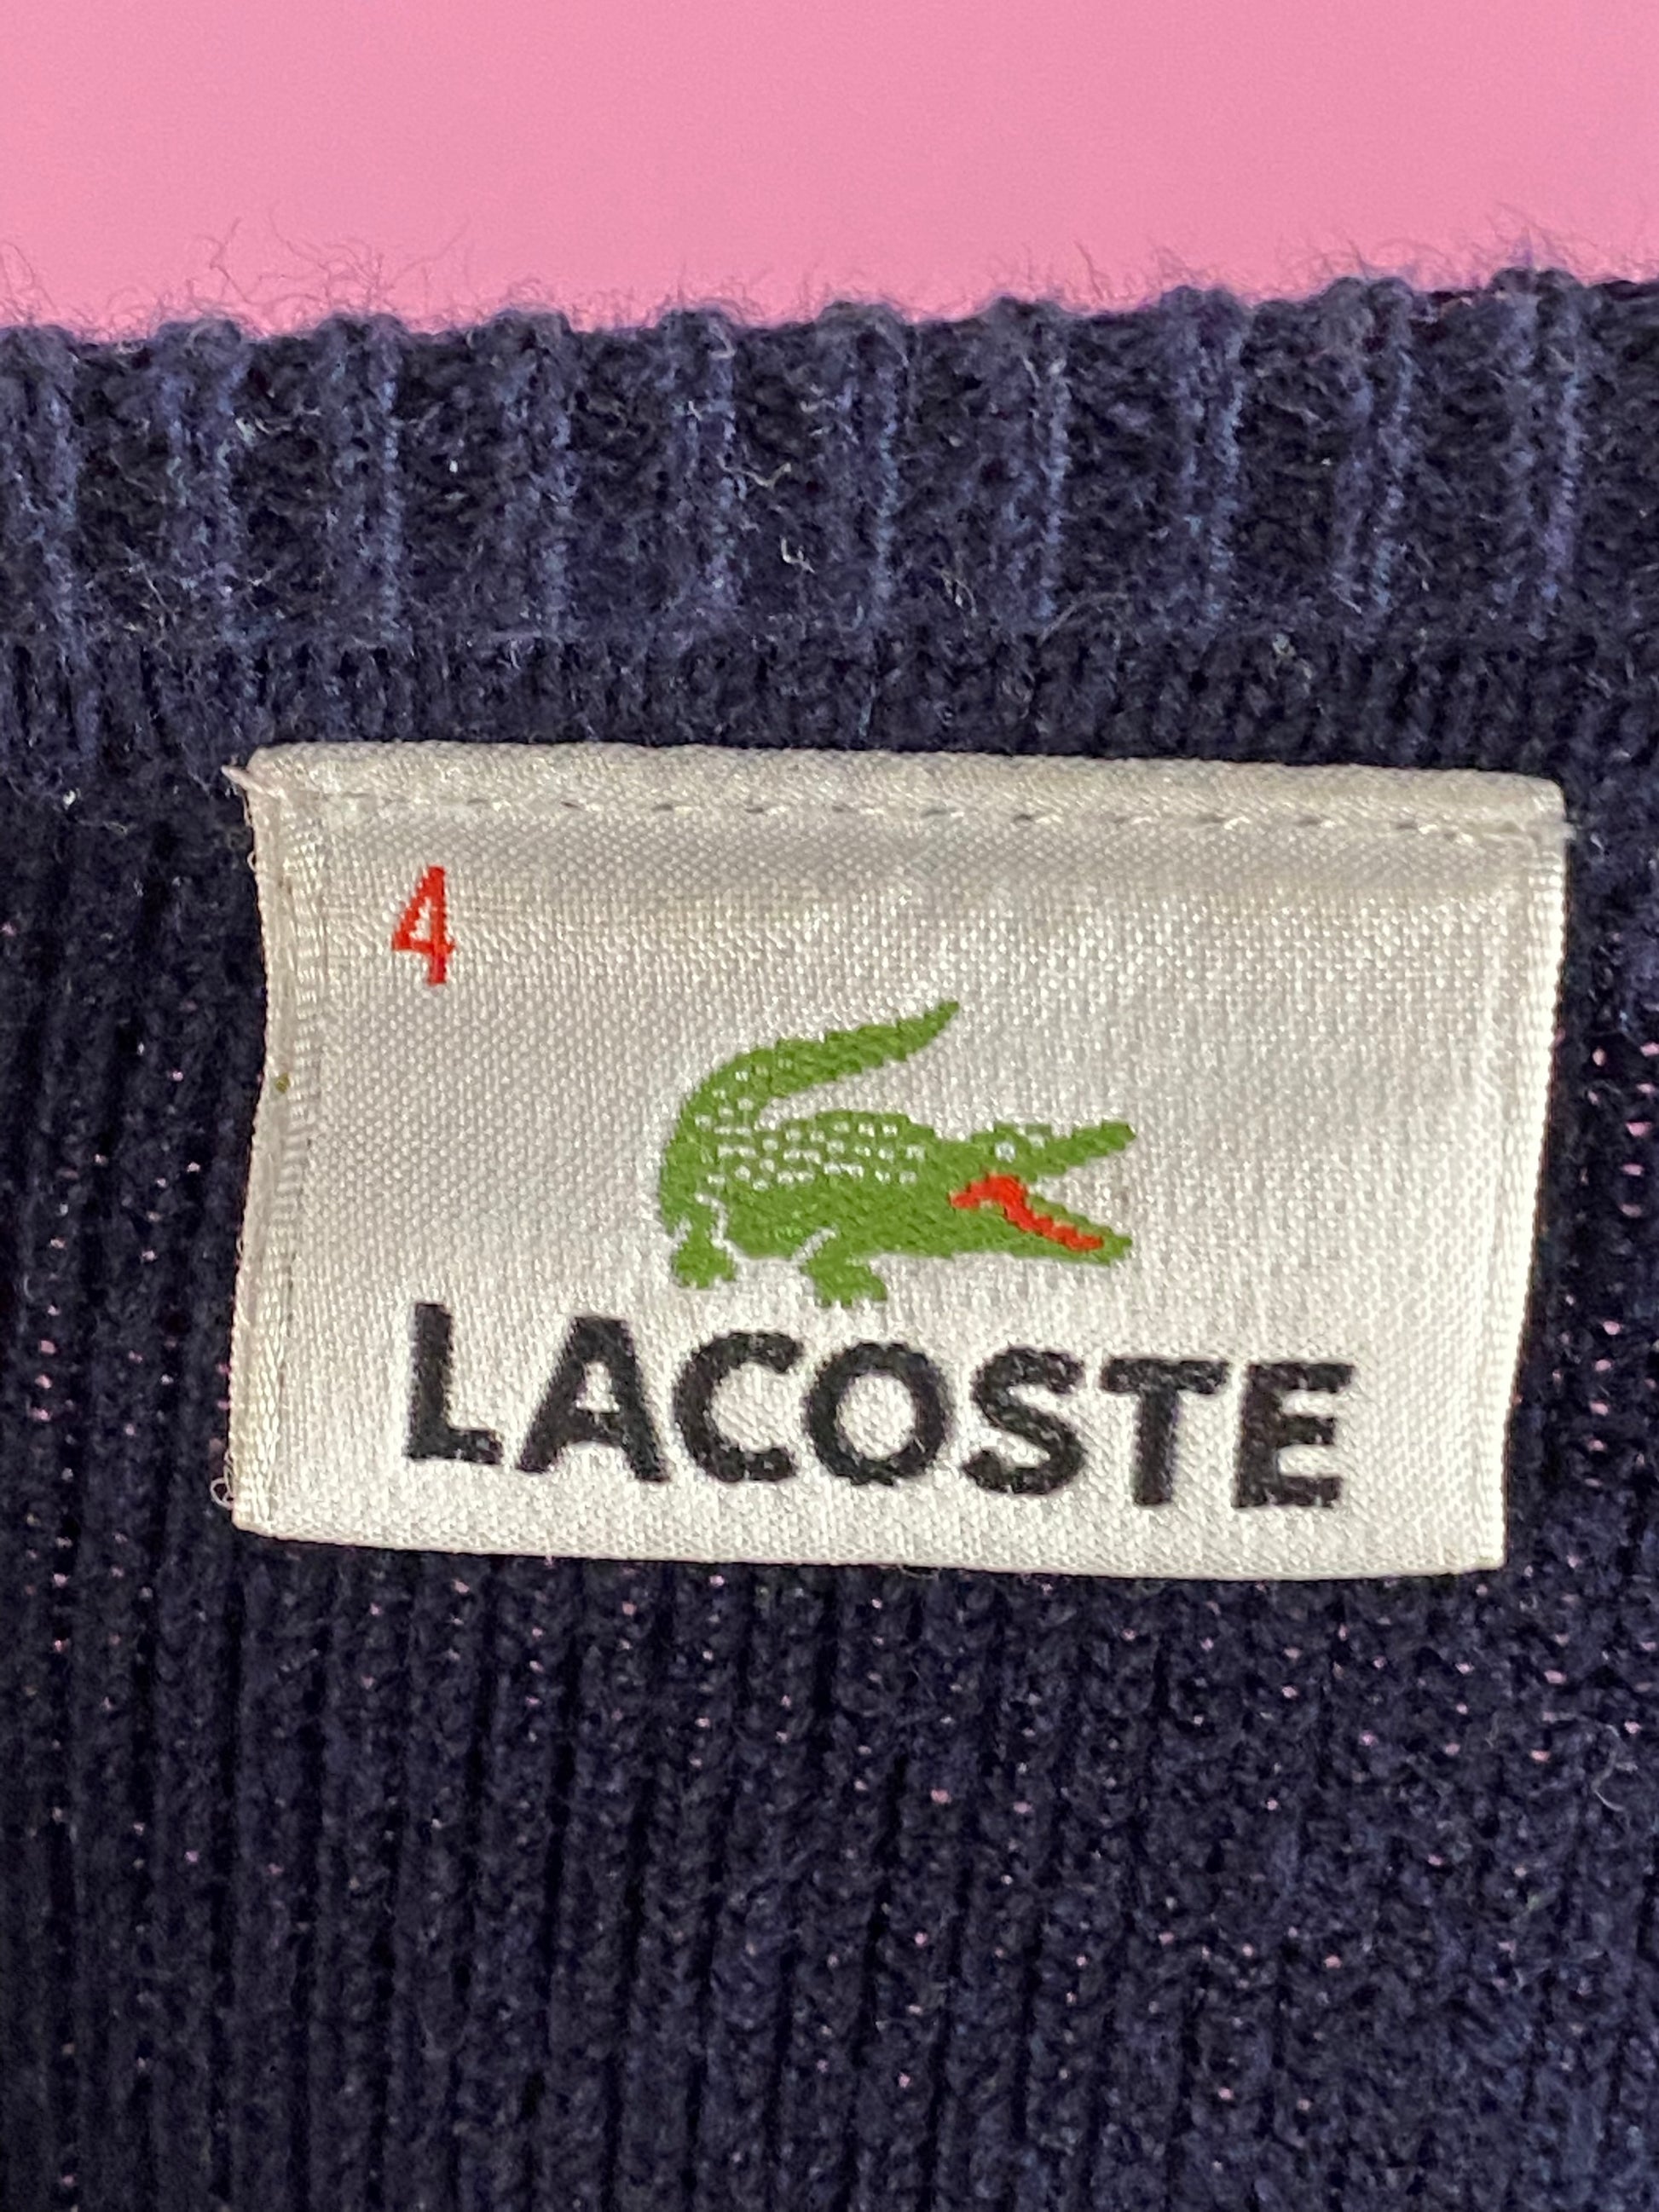 Lacoste Vintage Men's Sweater - Small Navy Blue Cotton Blend